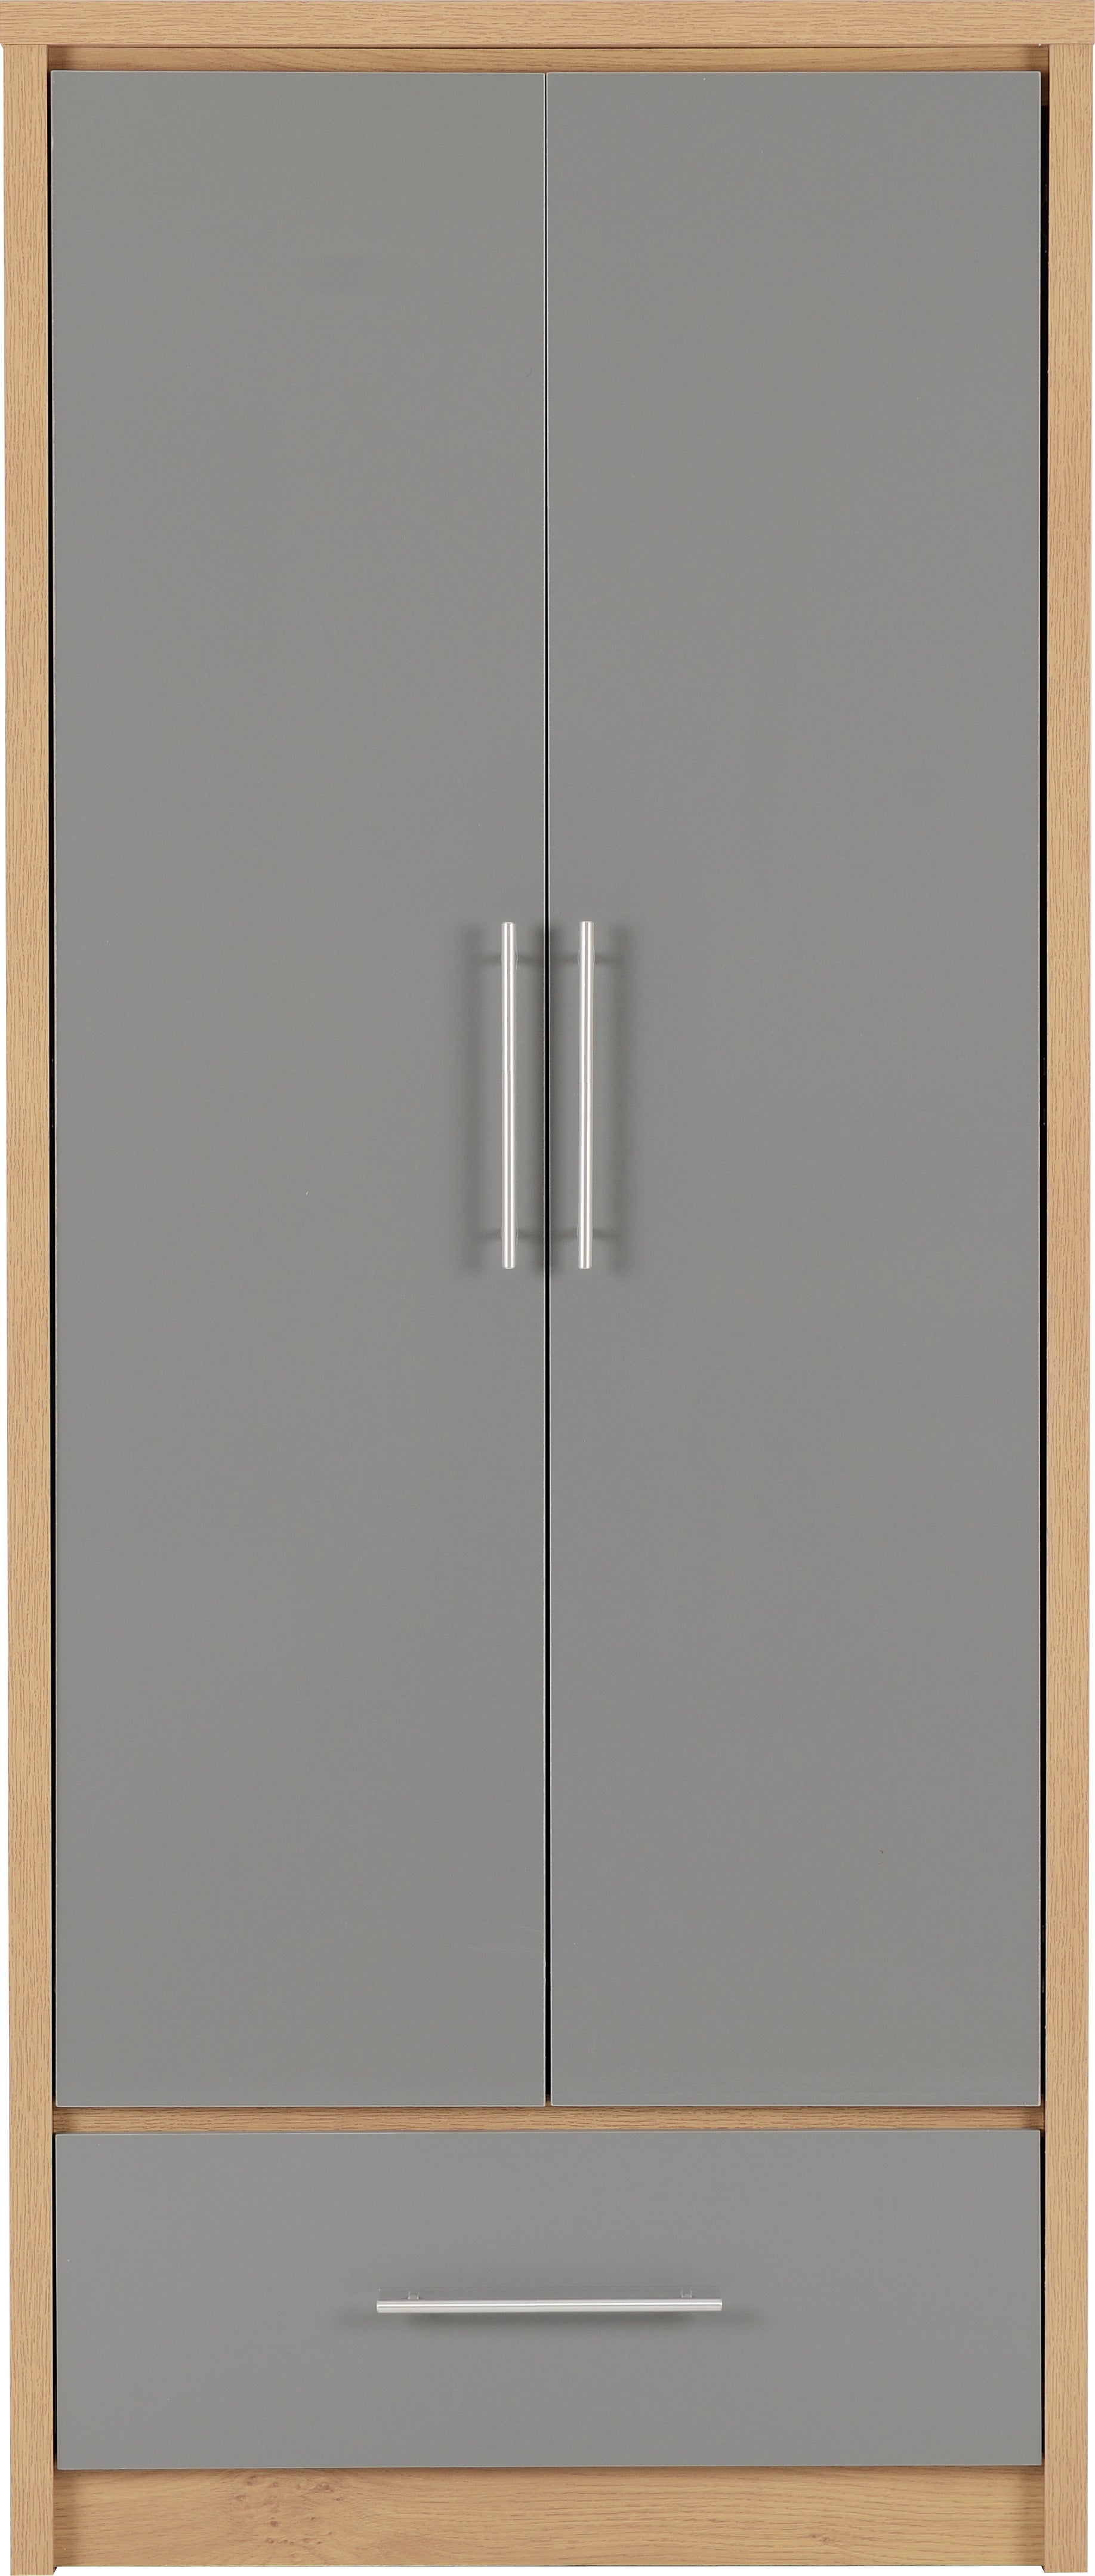 Seville 2 Door 1 Drawer Wardrobe - Grey High Gloss/Light Oak Effect Veneer